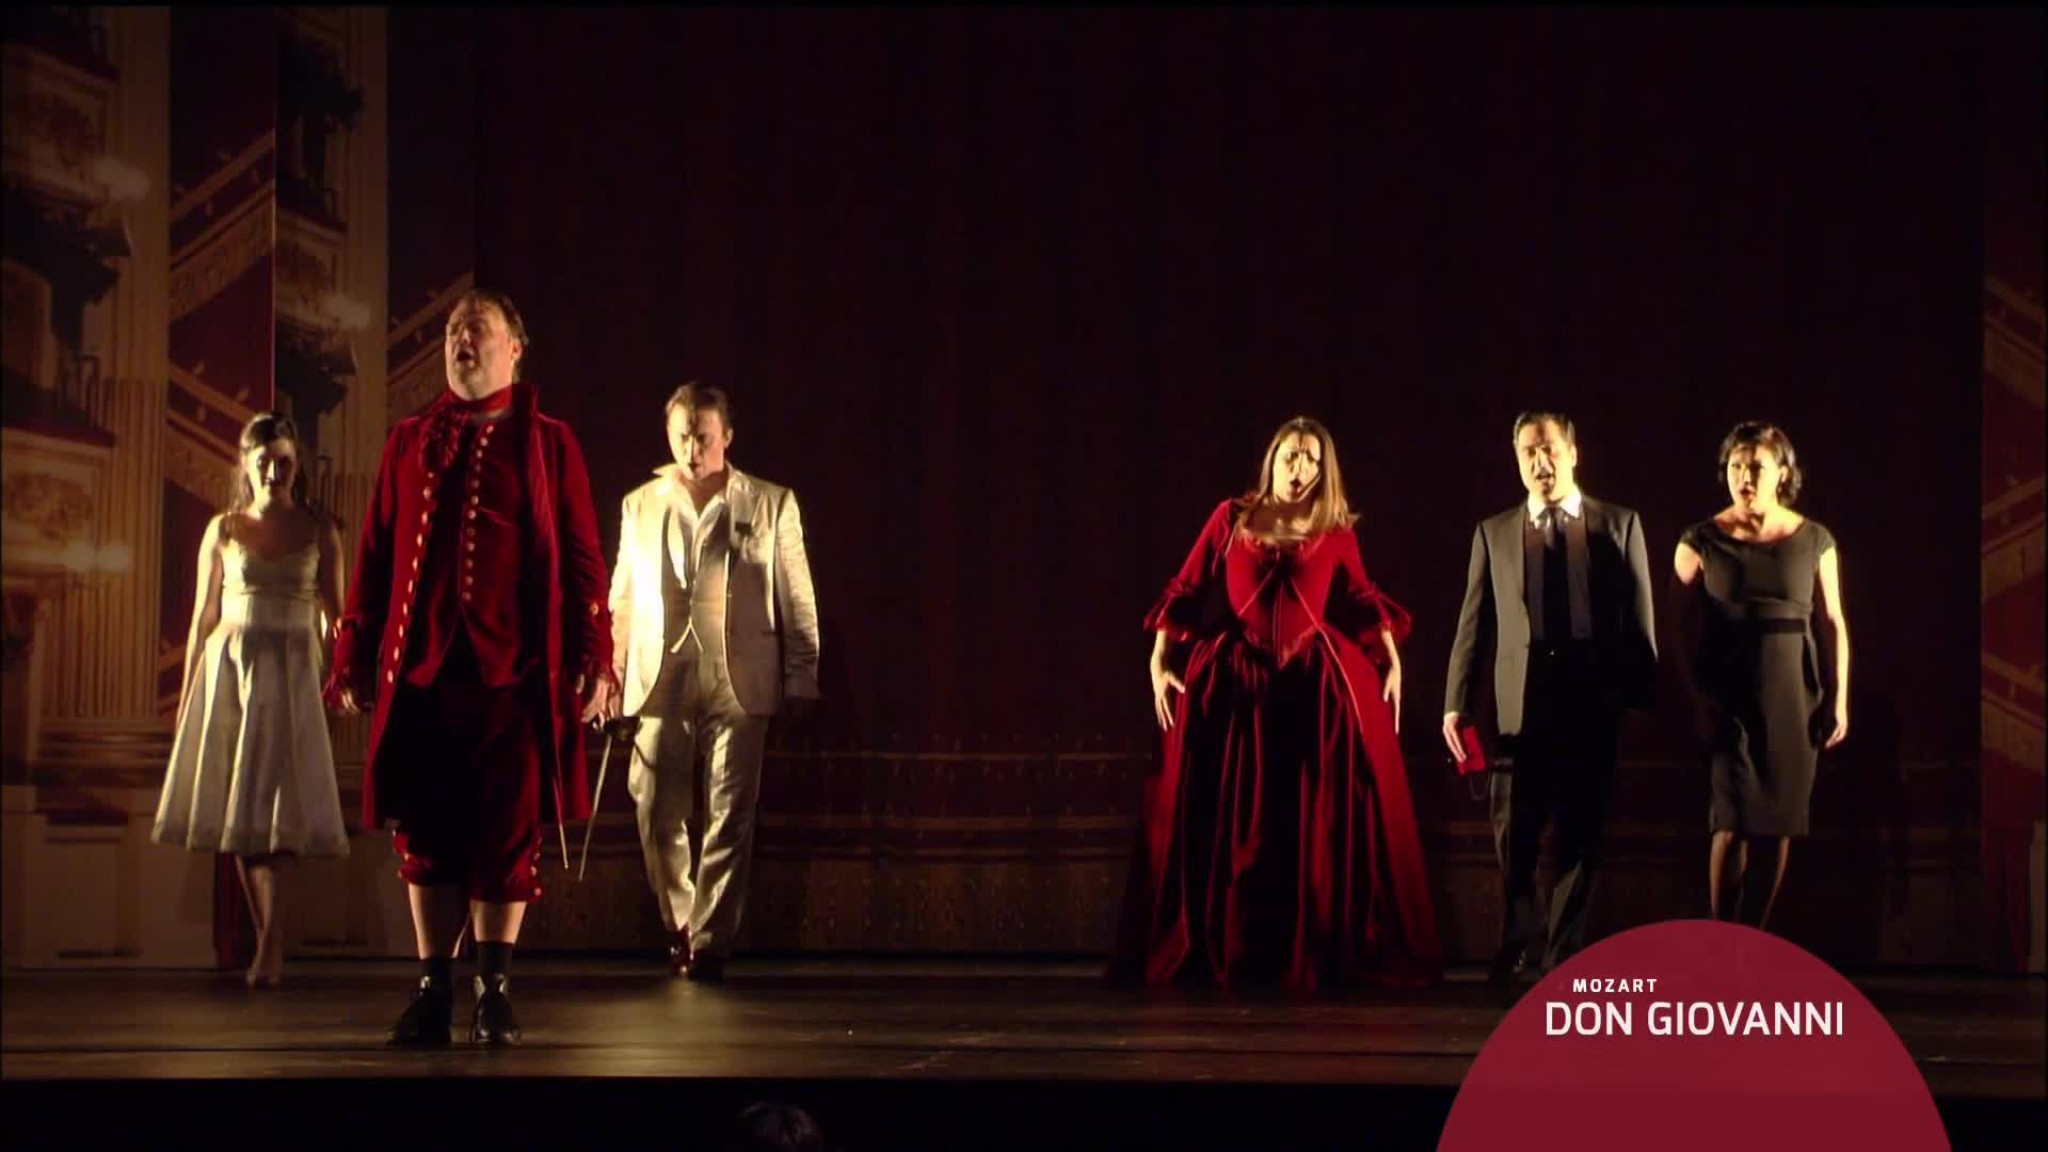 Don Giovanni (DVD/Blu-ray Trailer)